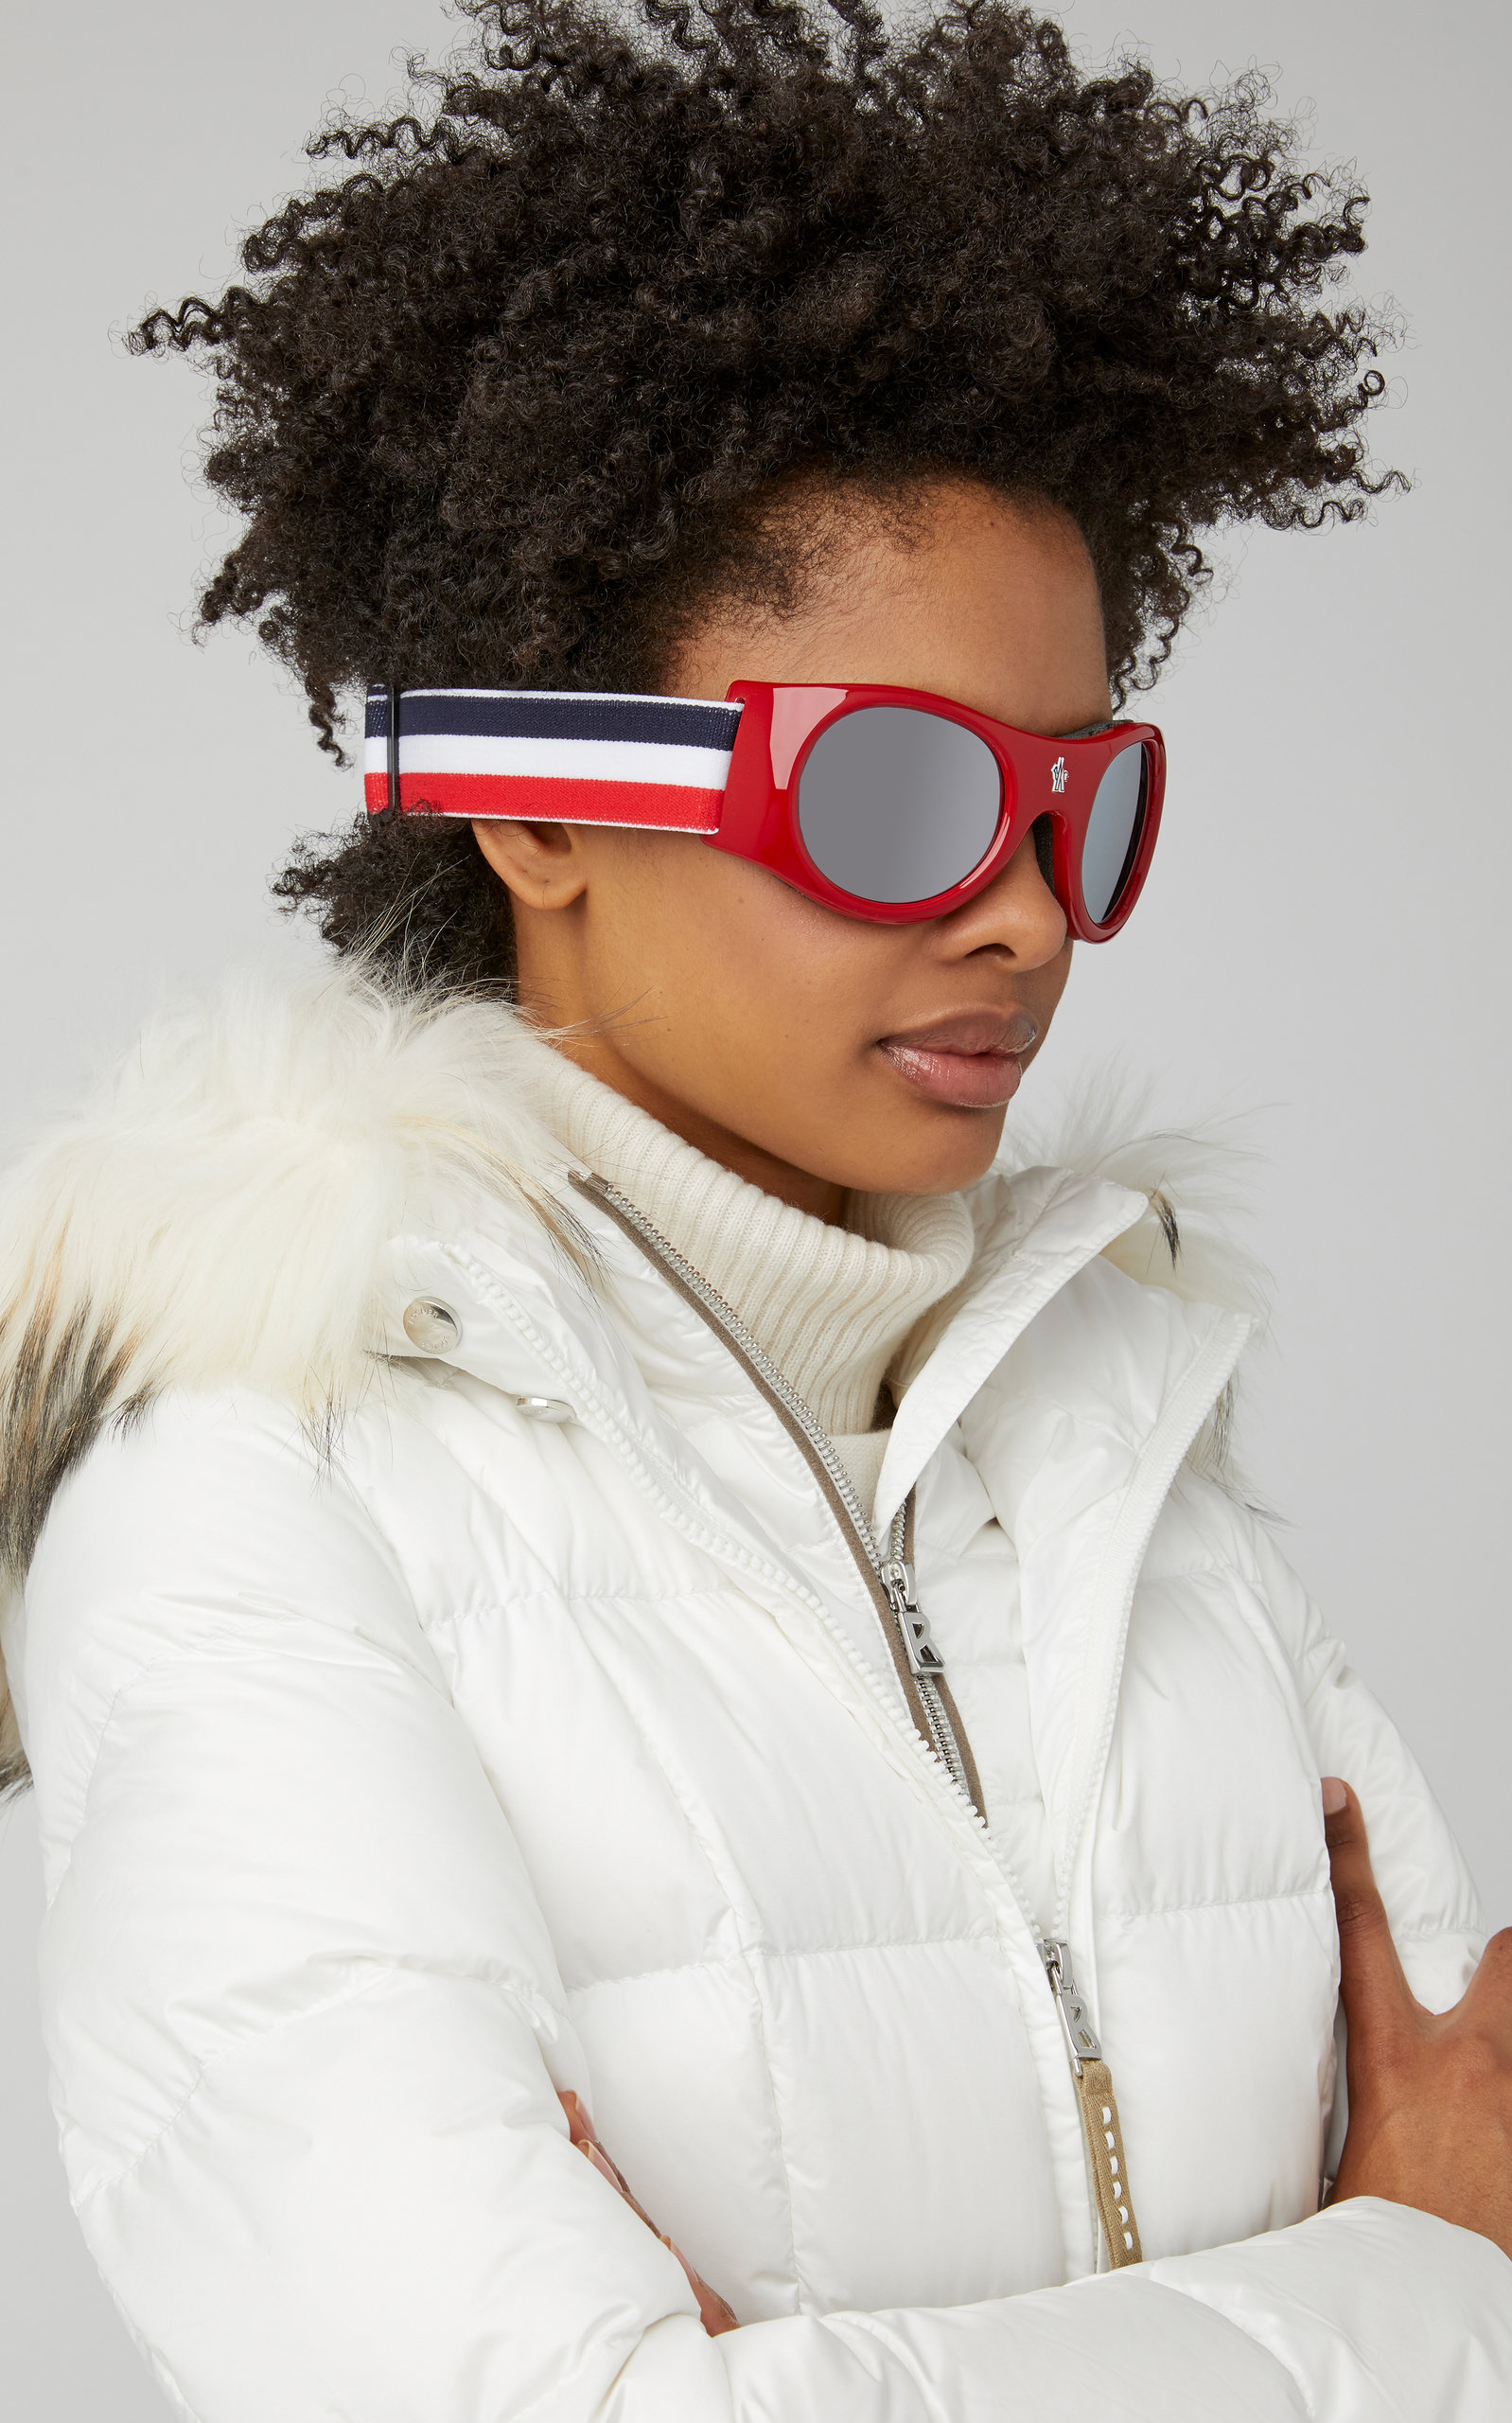 moncler acetate ski sunglasses